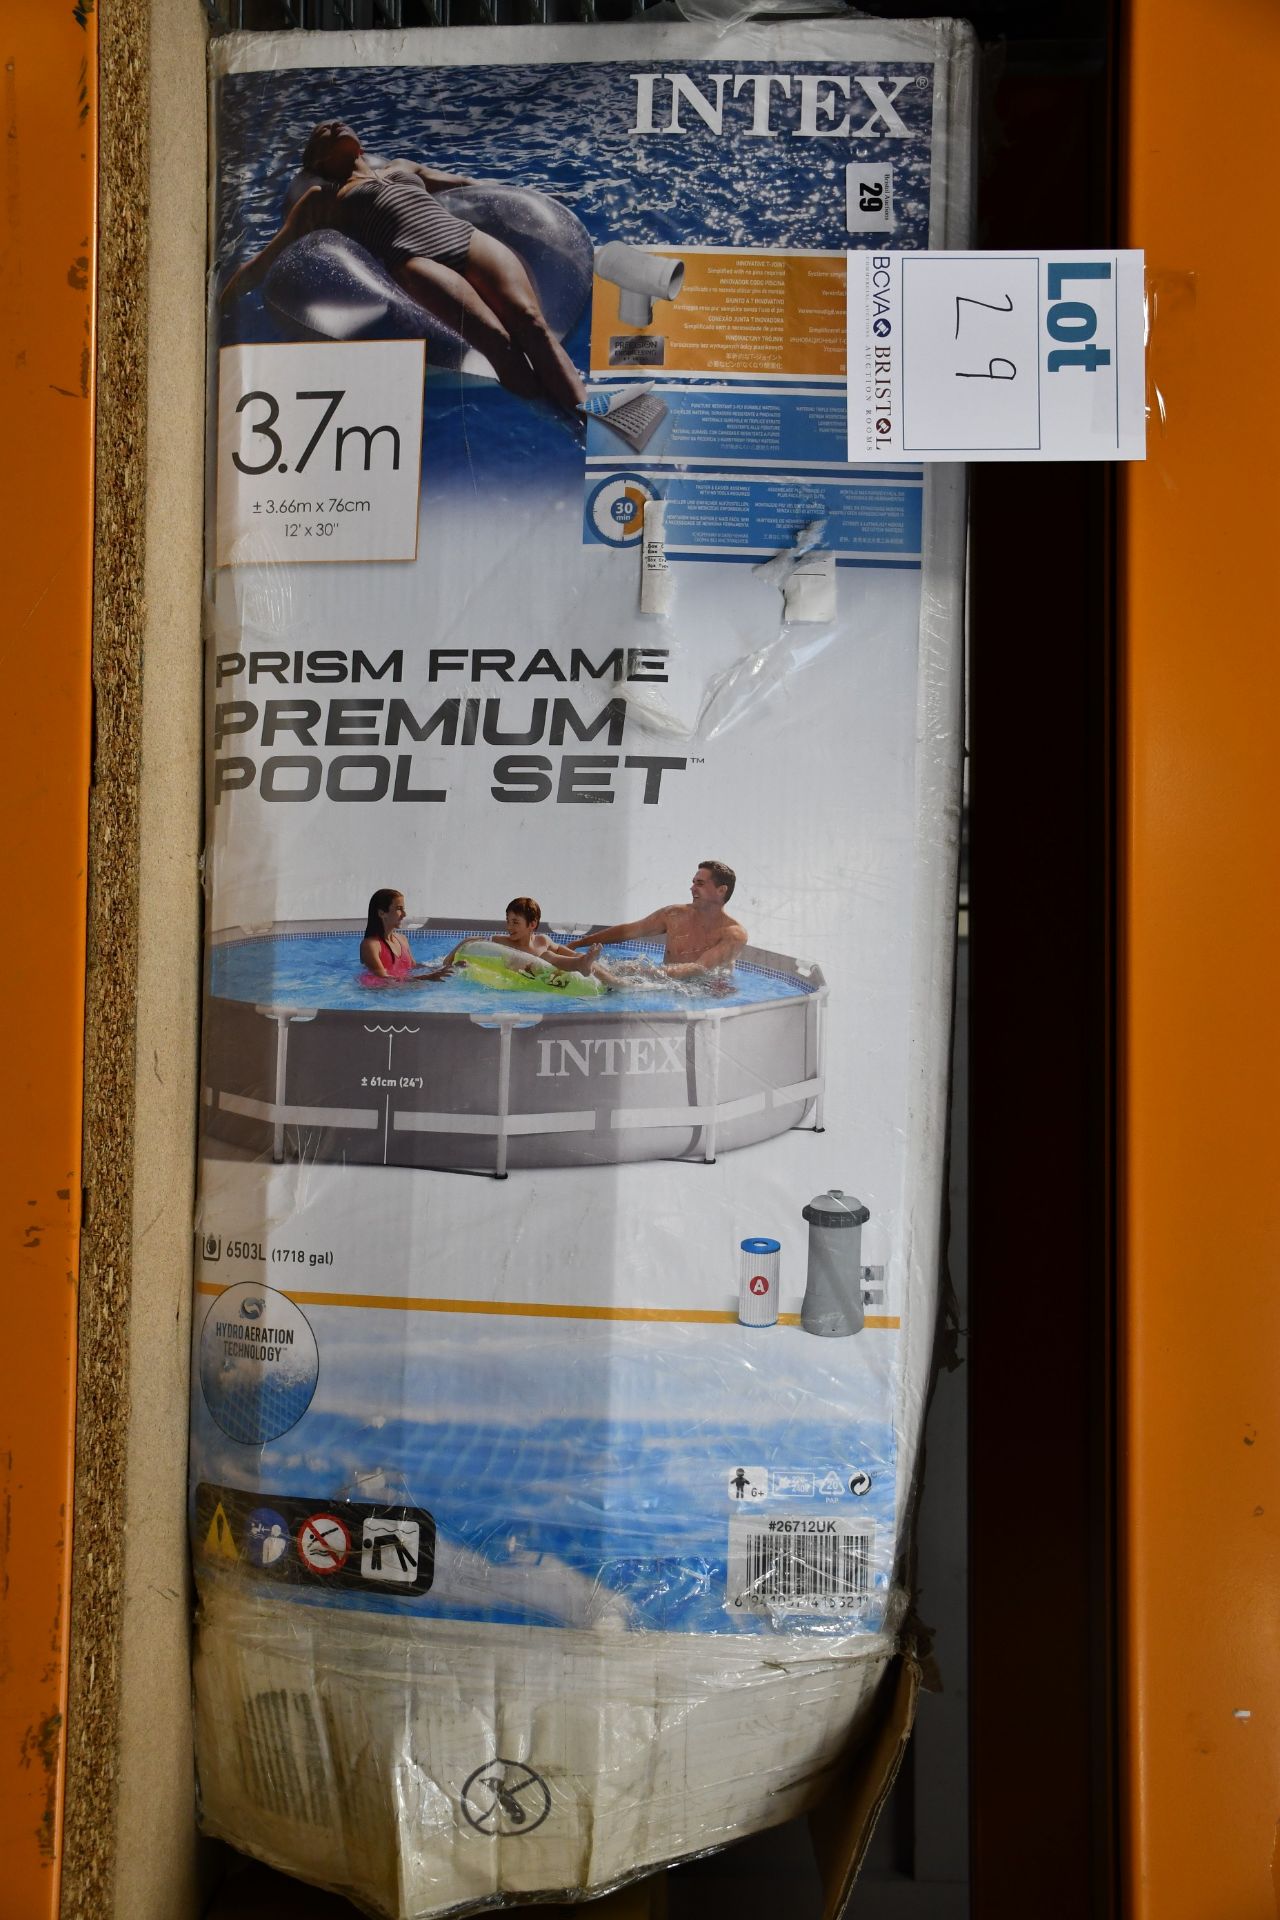 A boxed Intex prism frame premium pool set (12' x 30").